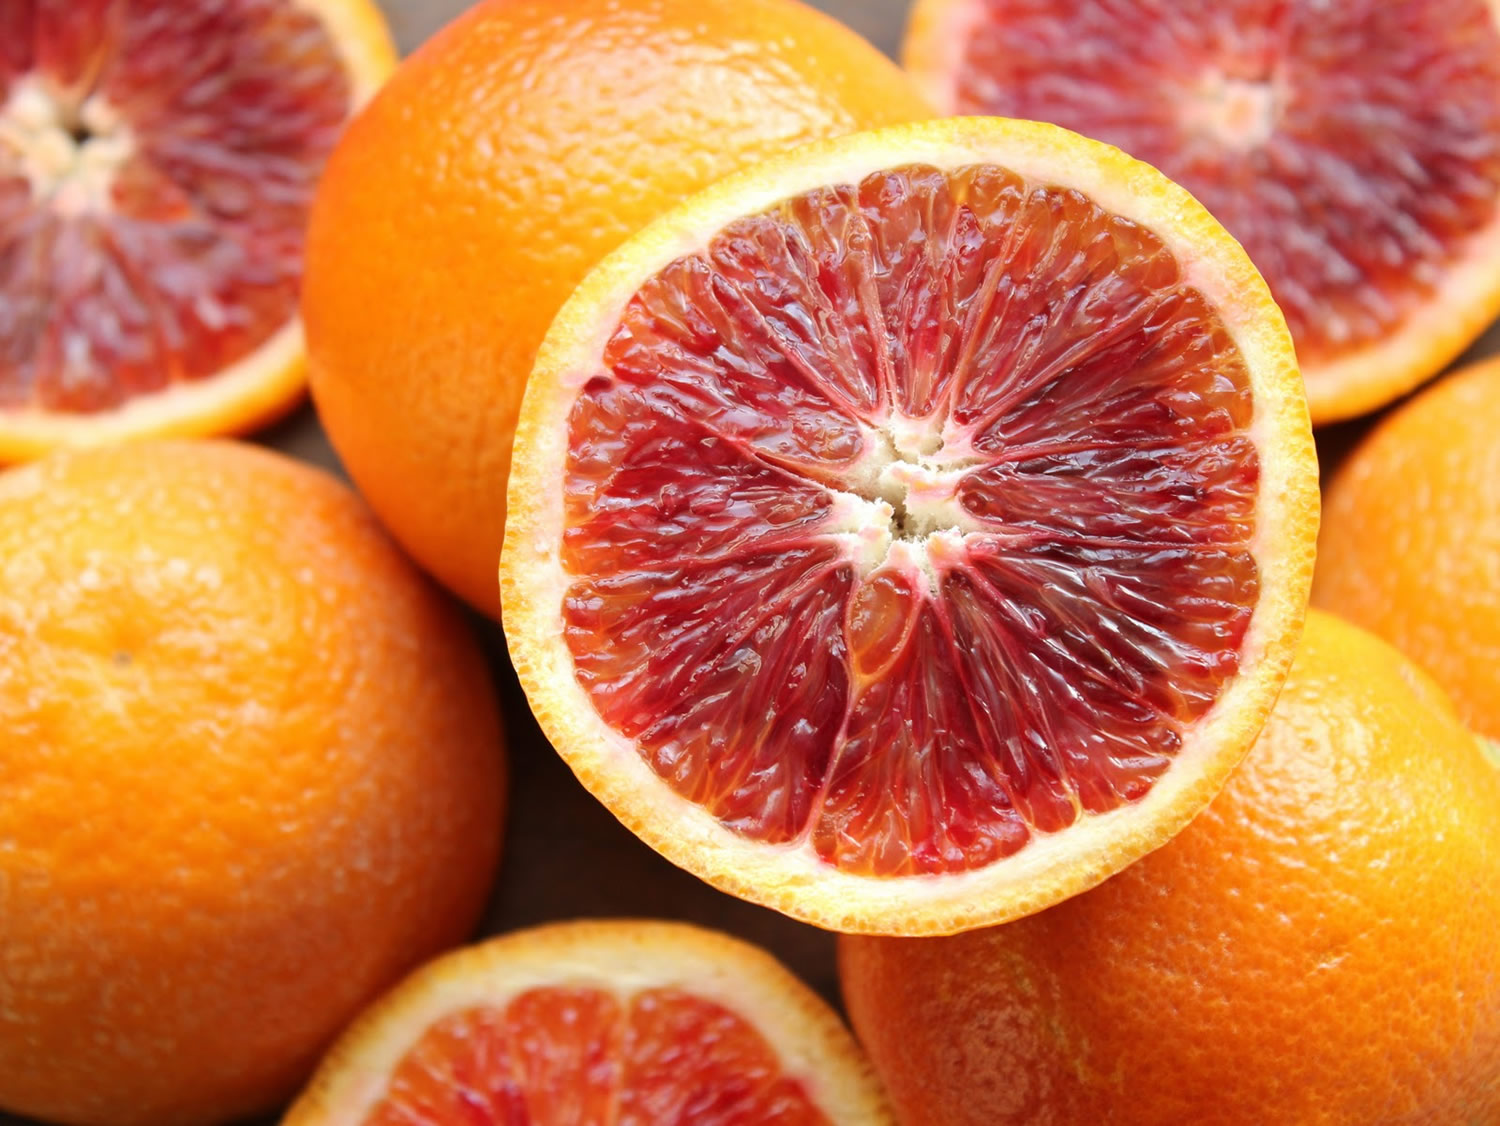 blood oranges